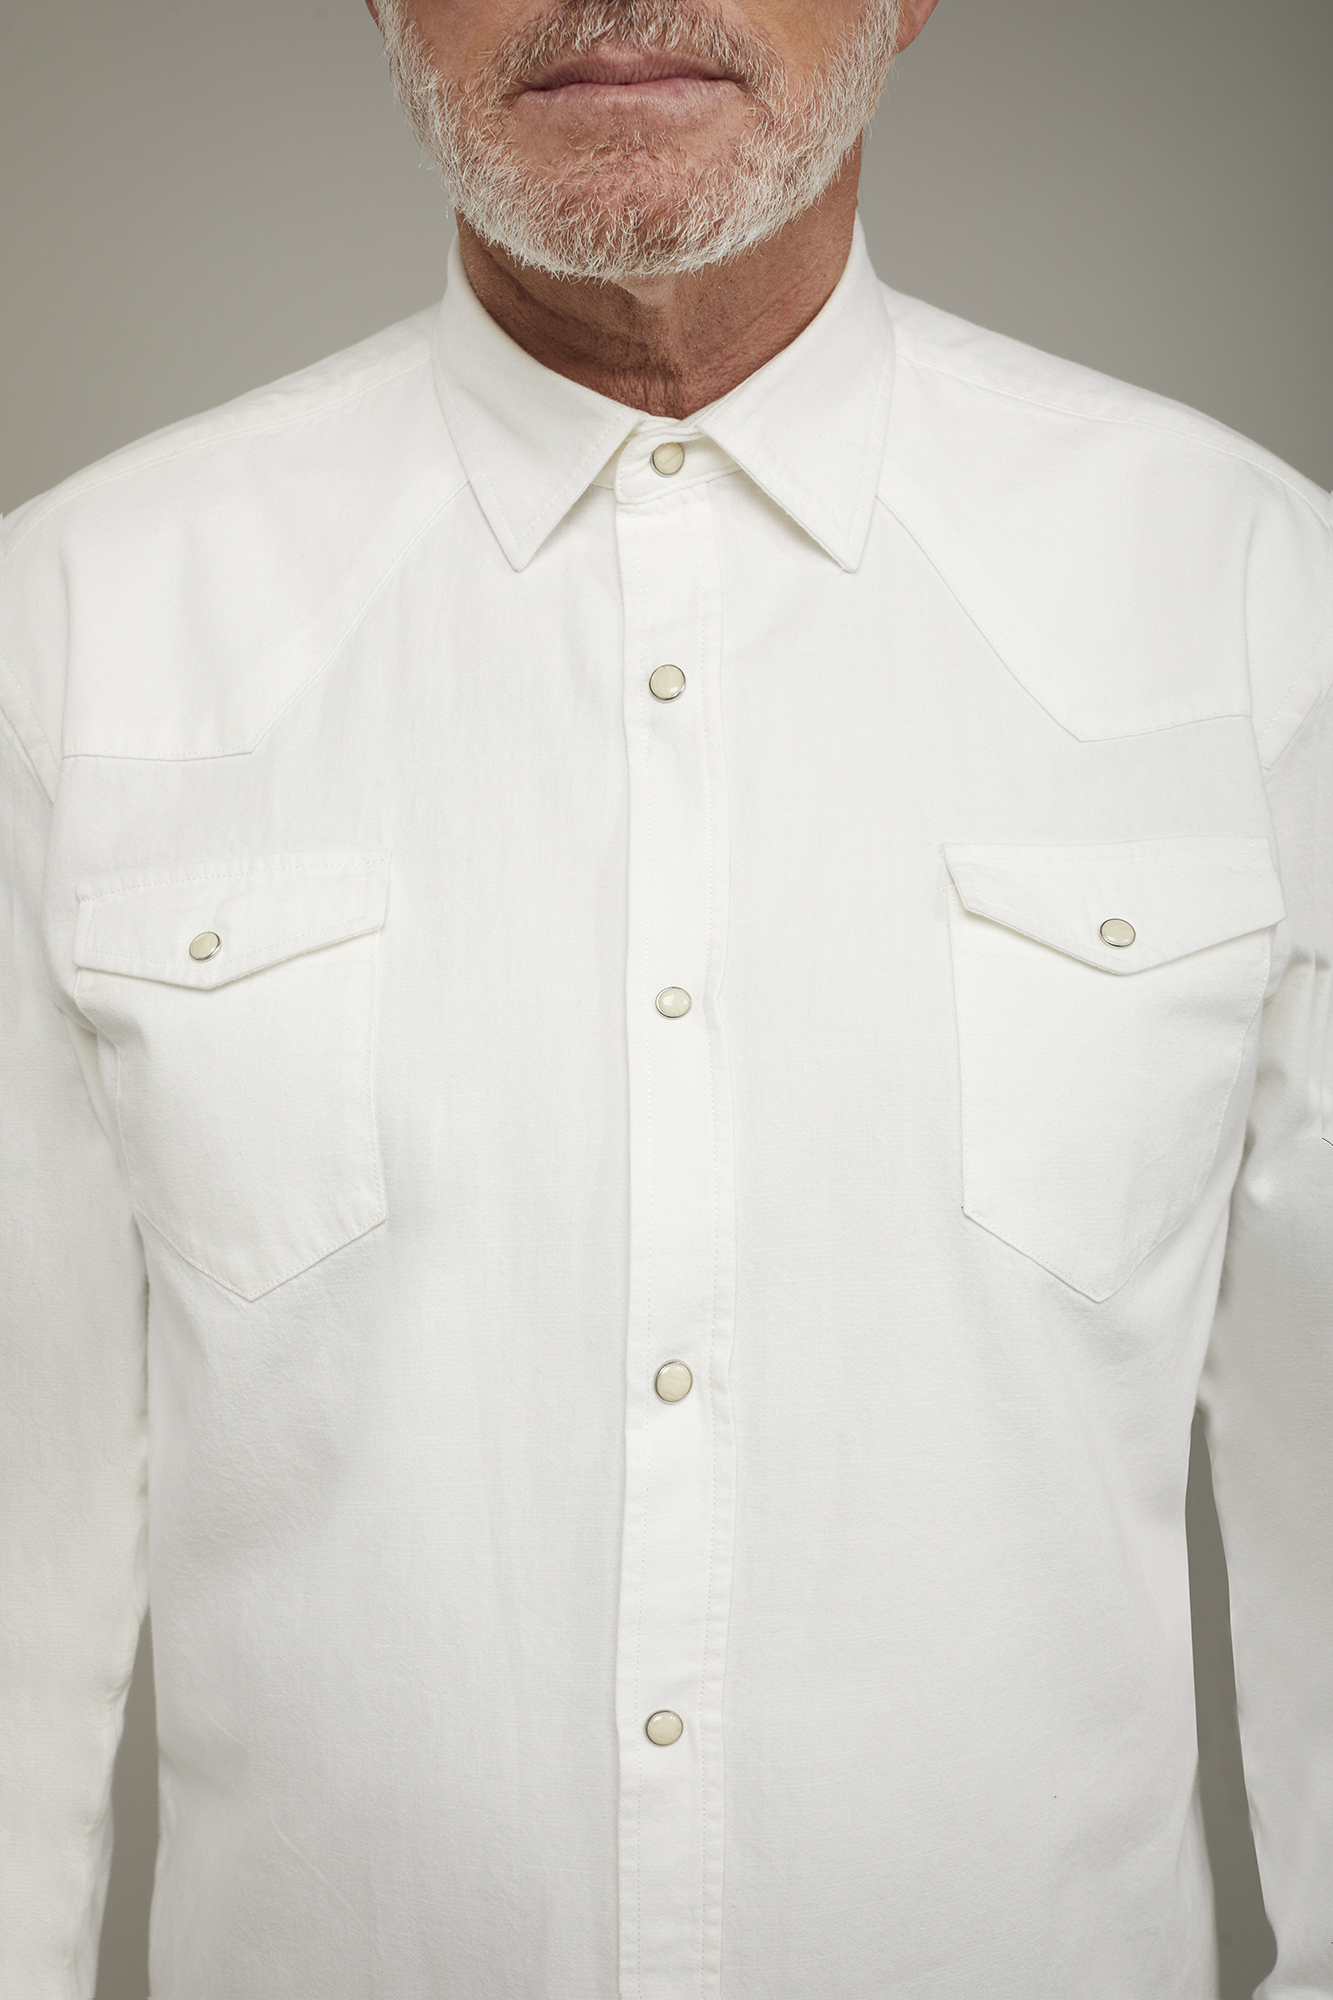 Camicia casual uomo collo classico 100% cotone tessuto denim comfort fit image number null